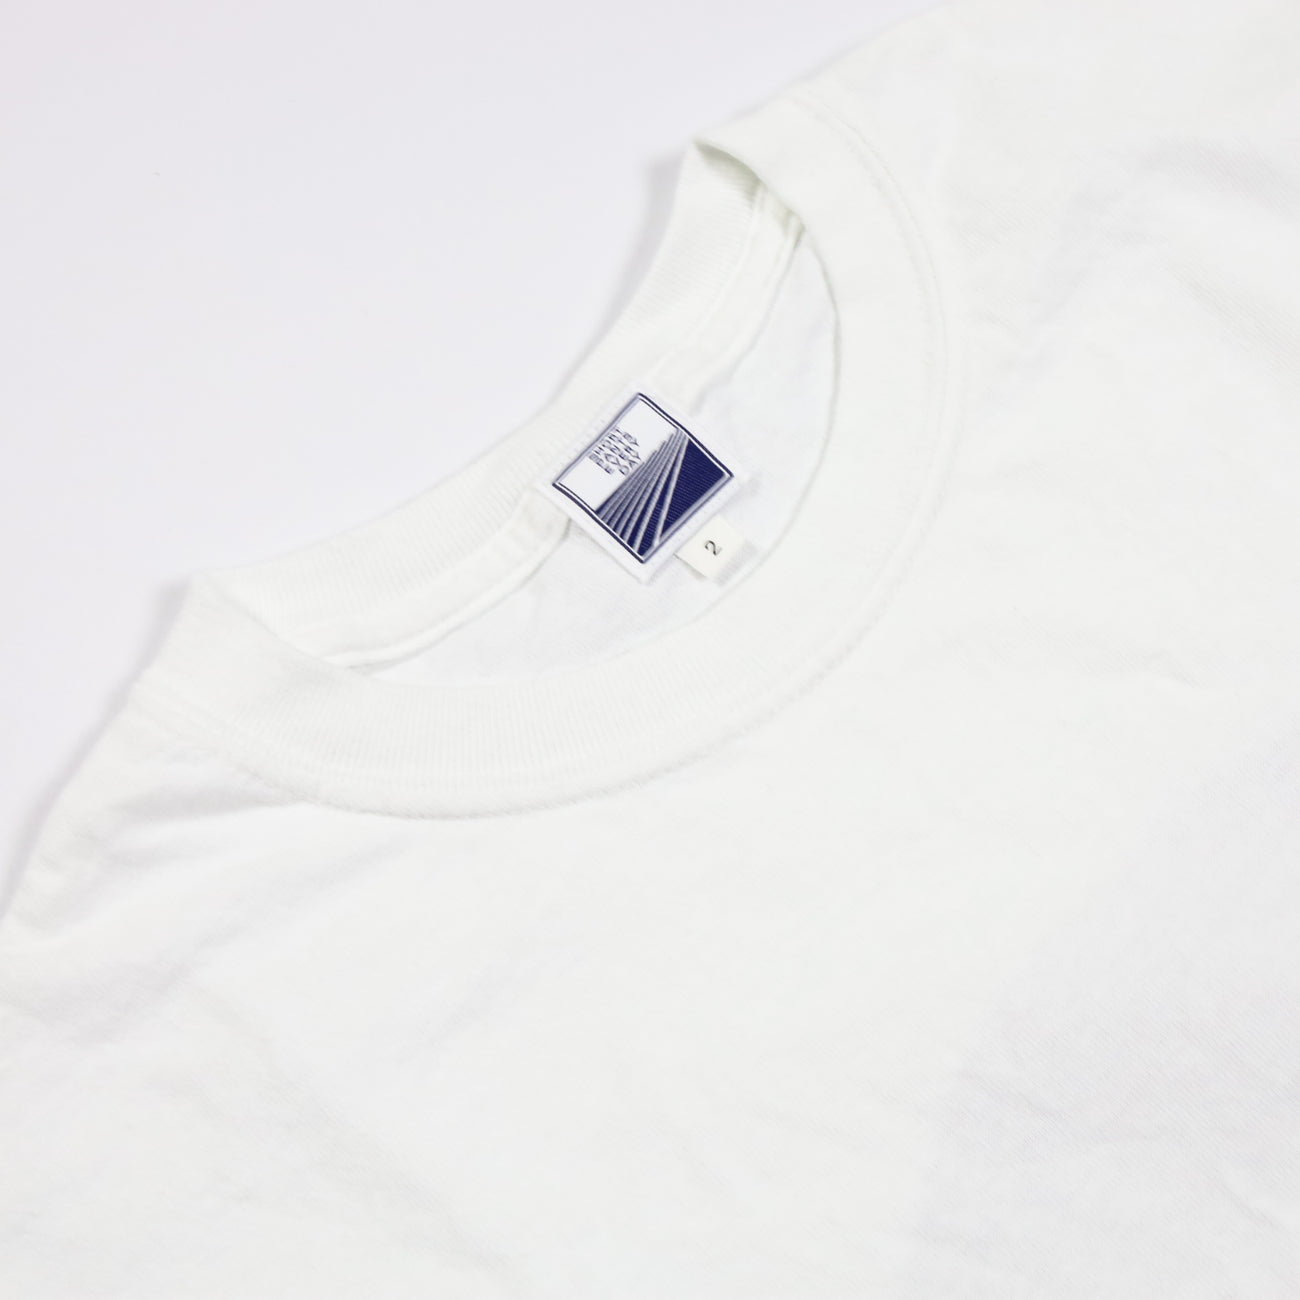 FREEDOM&NATIVE T-Shirts WHITE × PURPLE